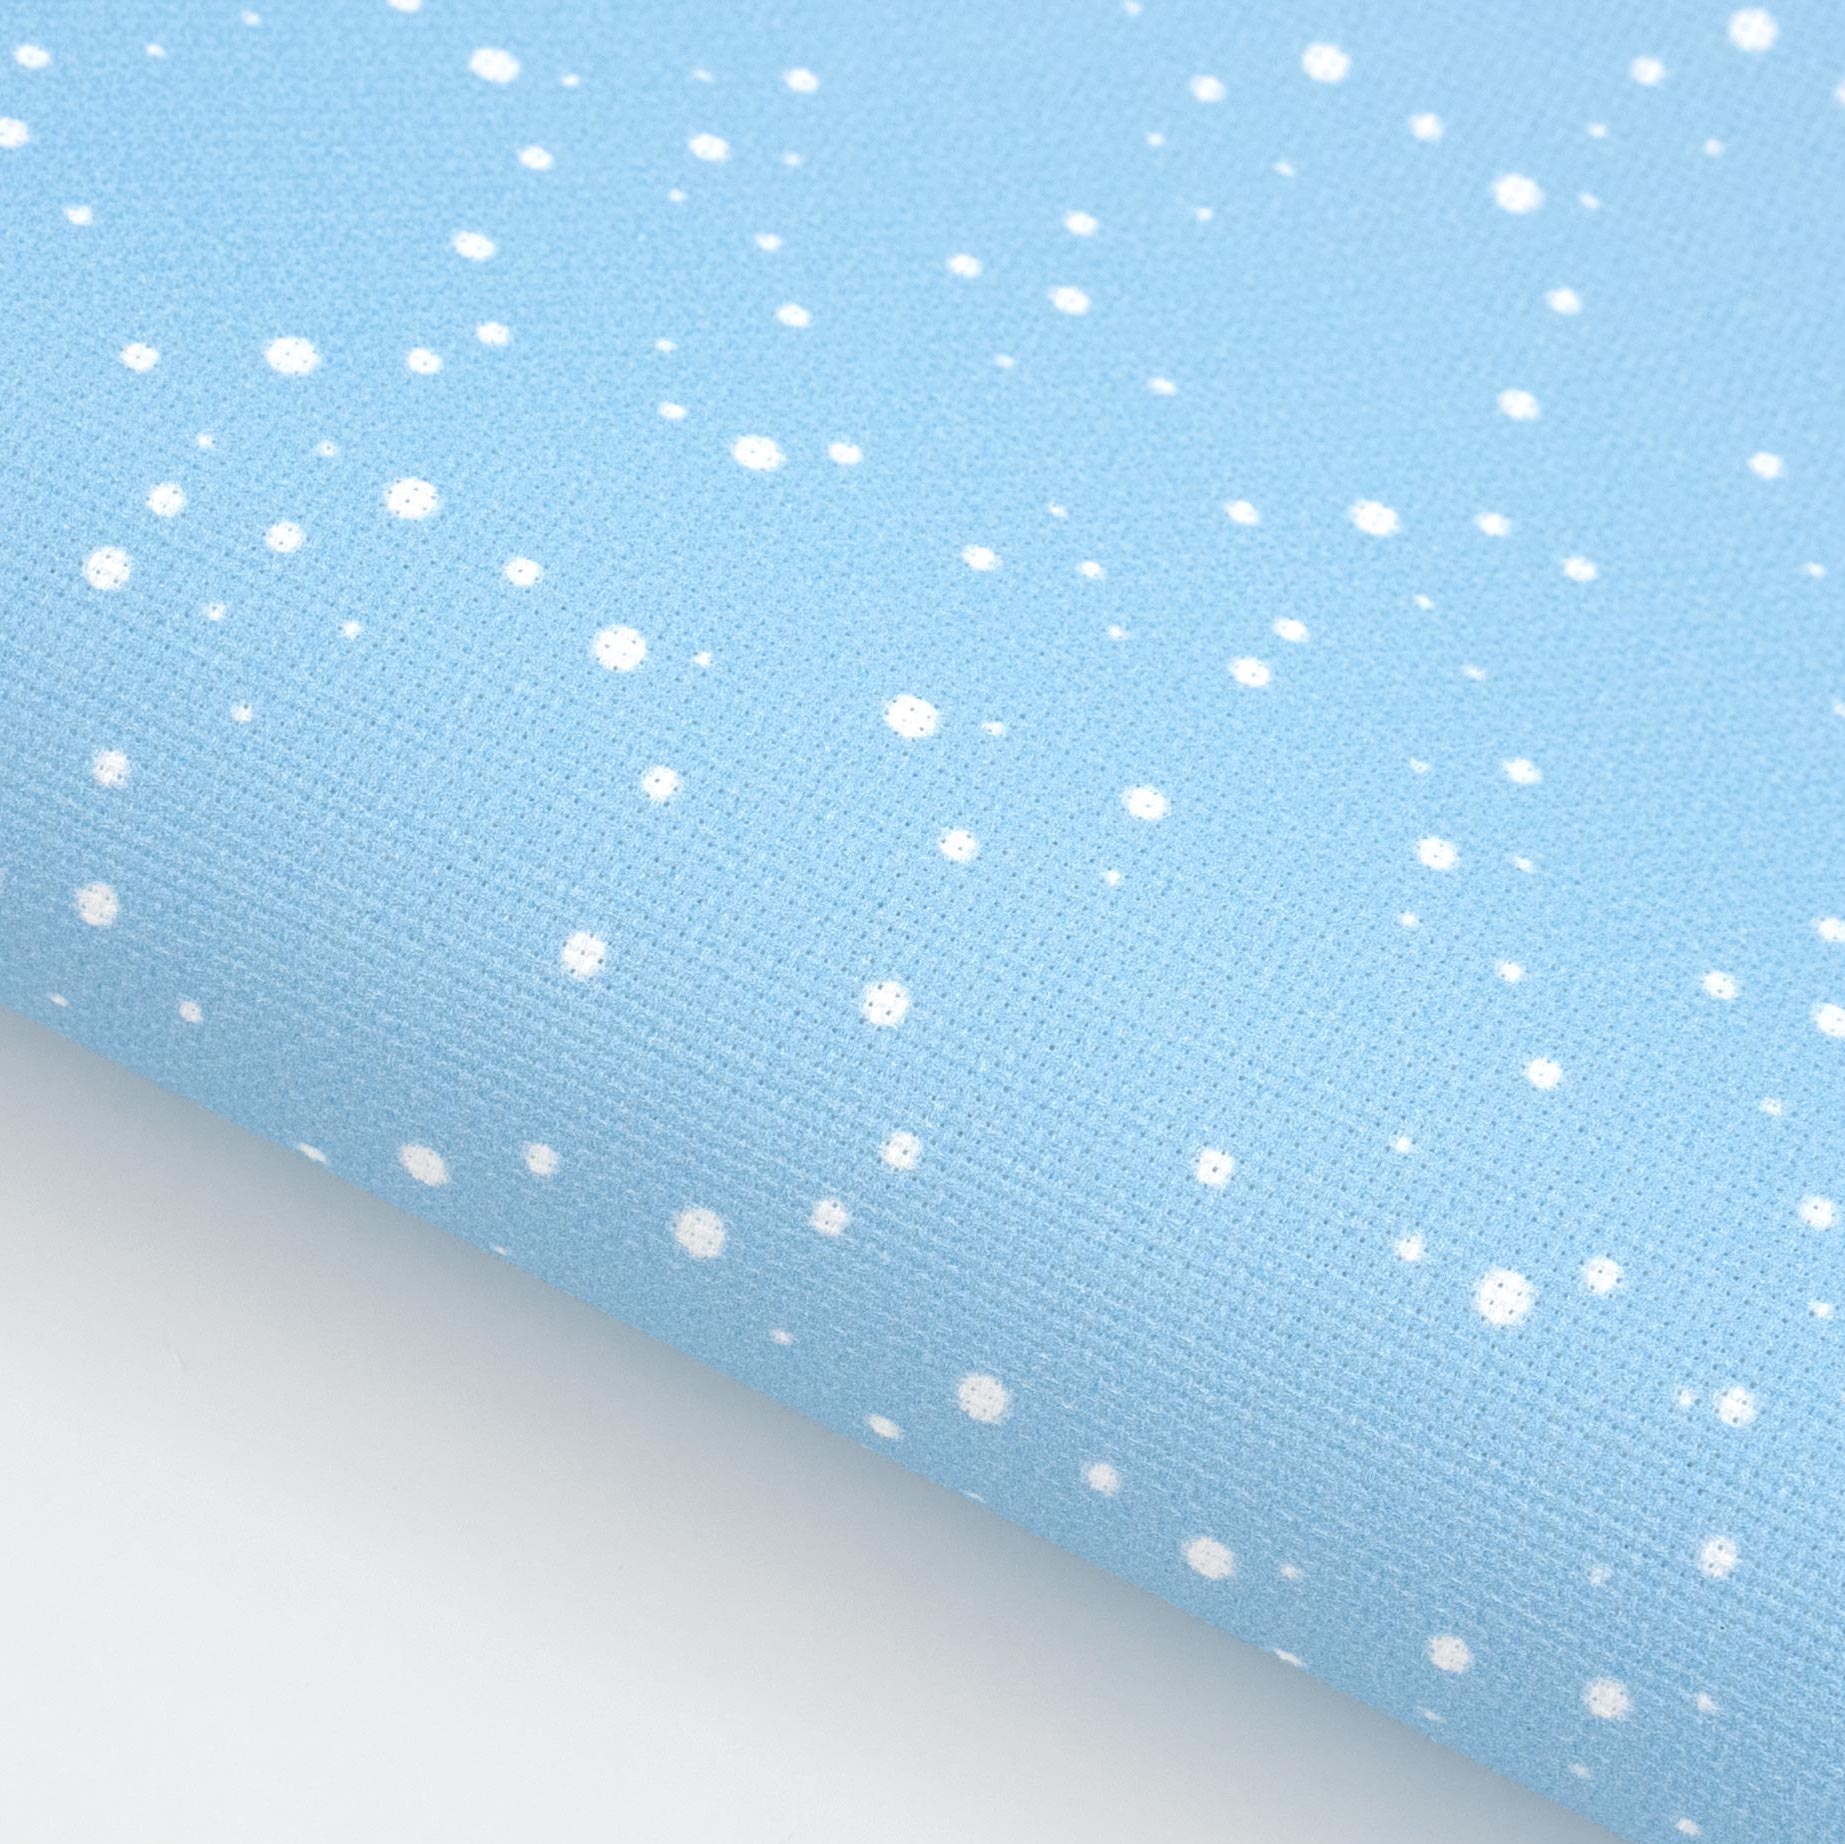 Cross Stitch Cloth - Fabric Flair 16 Count Aida - Snow on Blue with Glitter  18 x 20